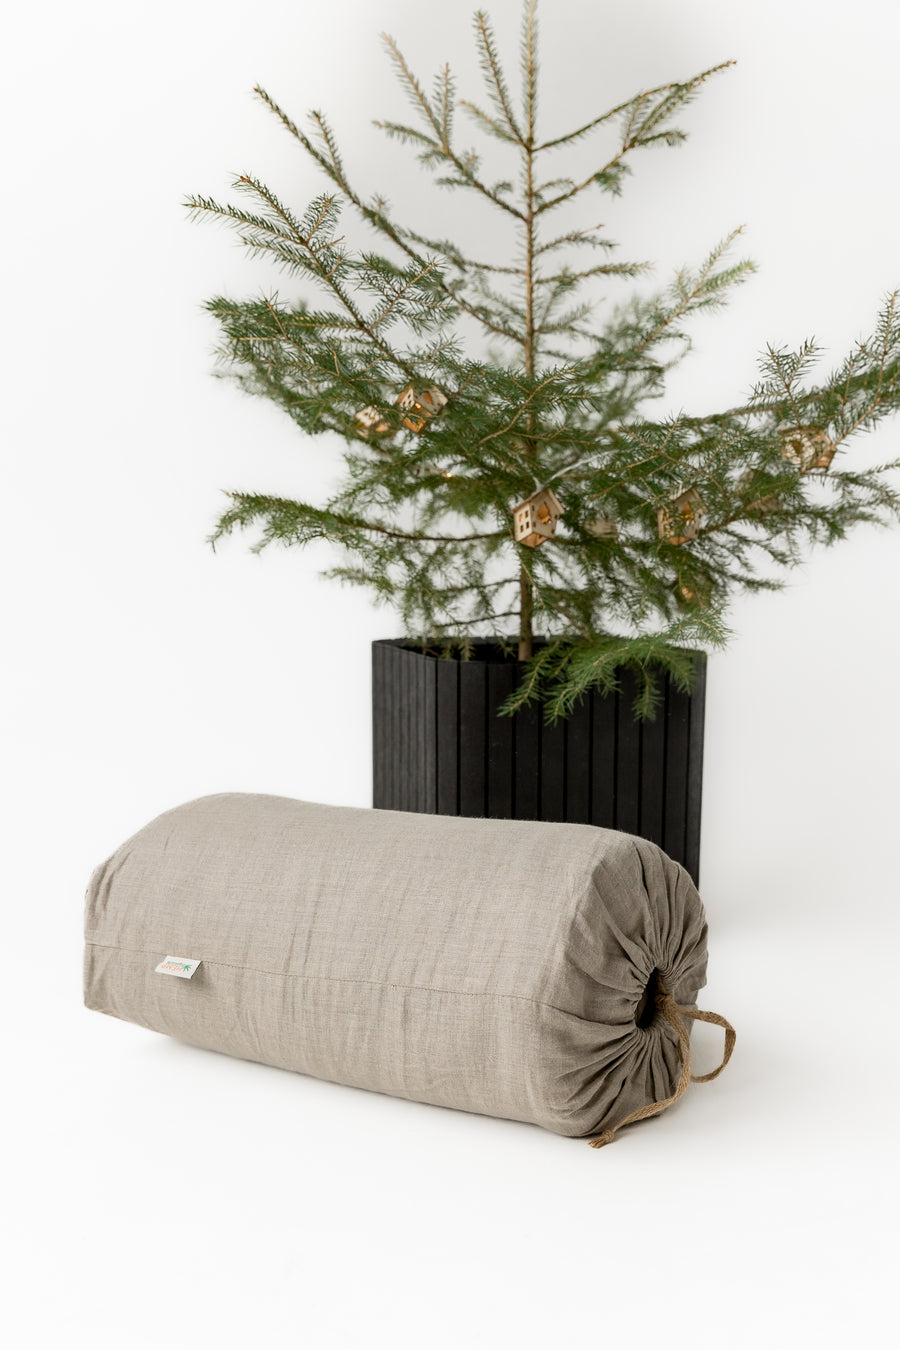 Christmas gift organic HEMP Sleeping bag in Linen fabric filled Organic Hemp fiber filling blanket, hand made Gift for camping